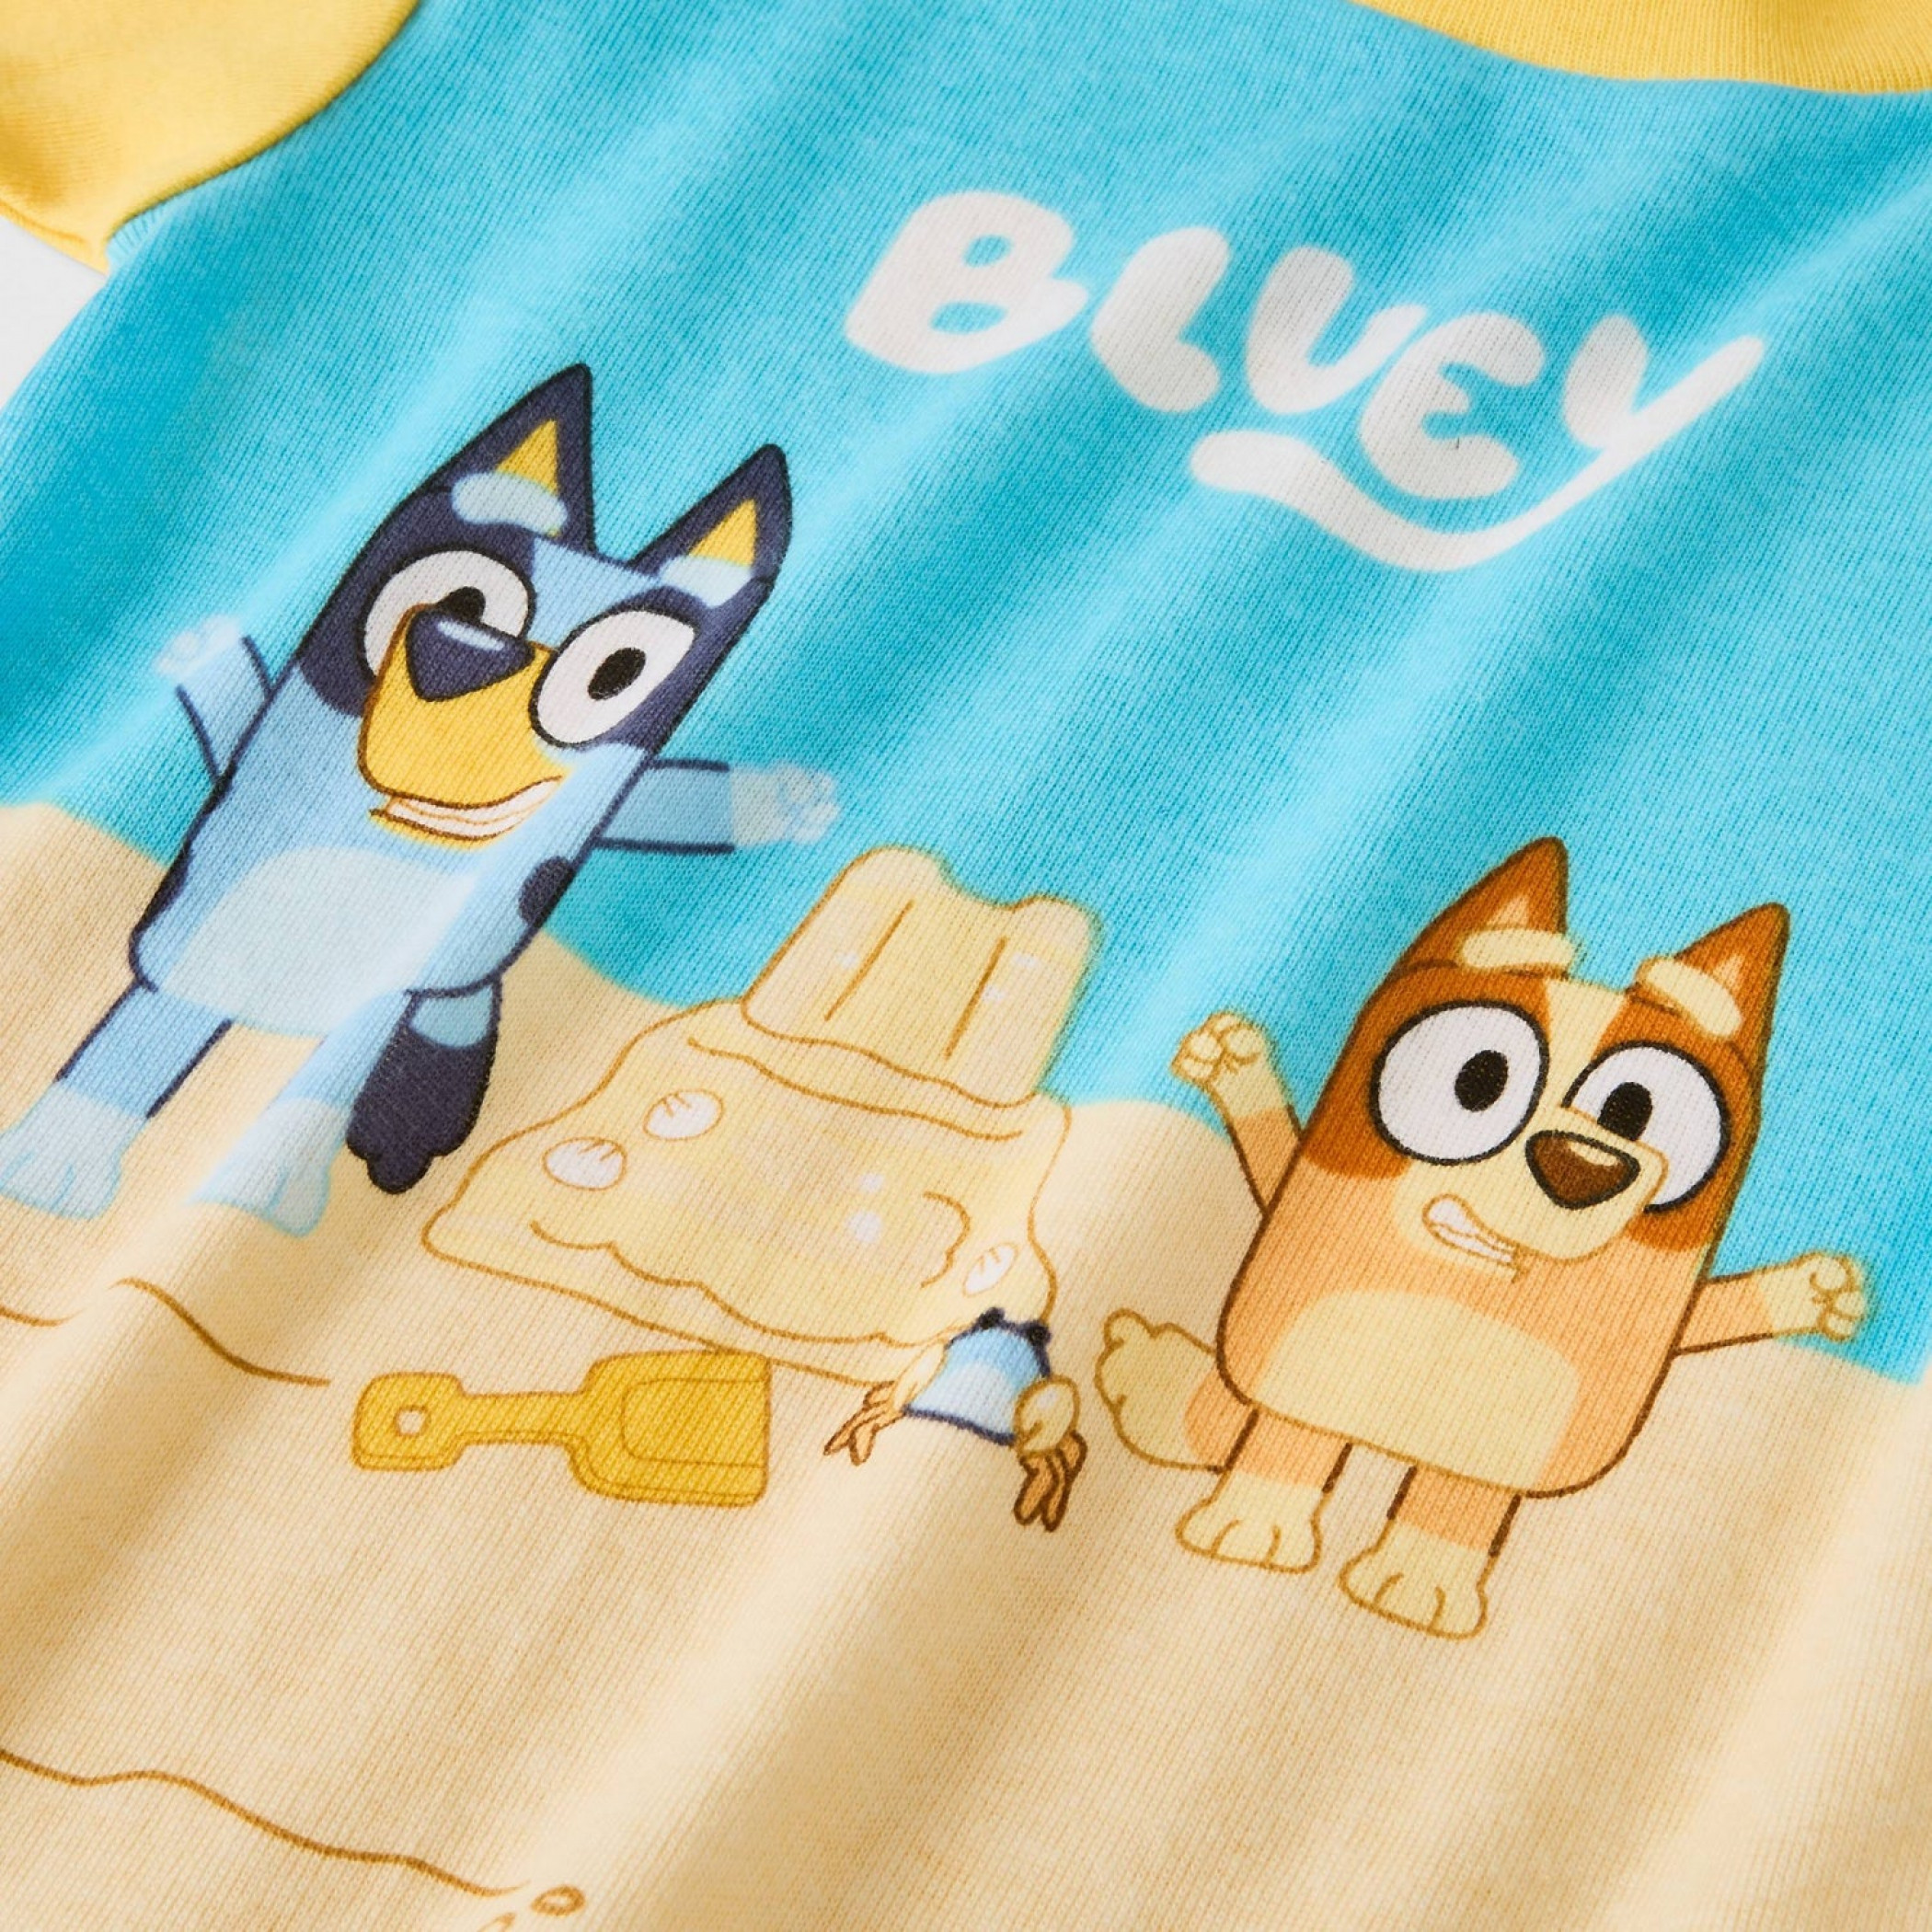 Bluey Sand Castles 4-Piece Toddler Pajama Set